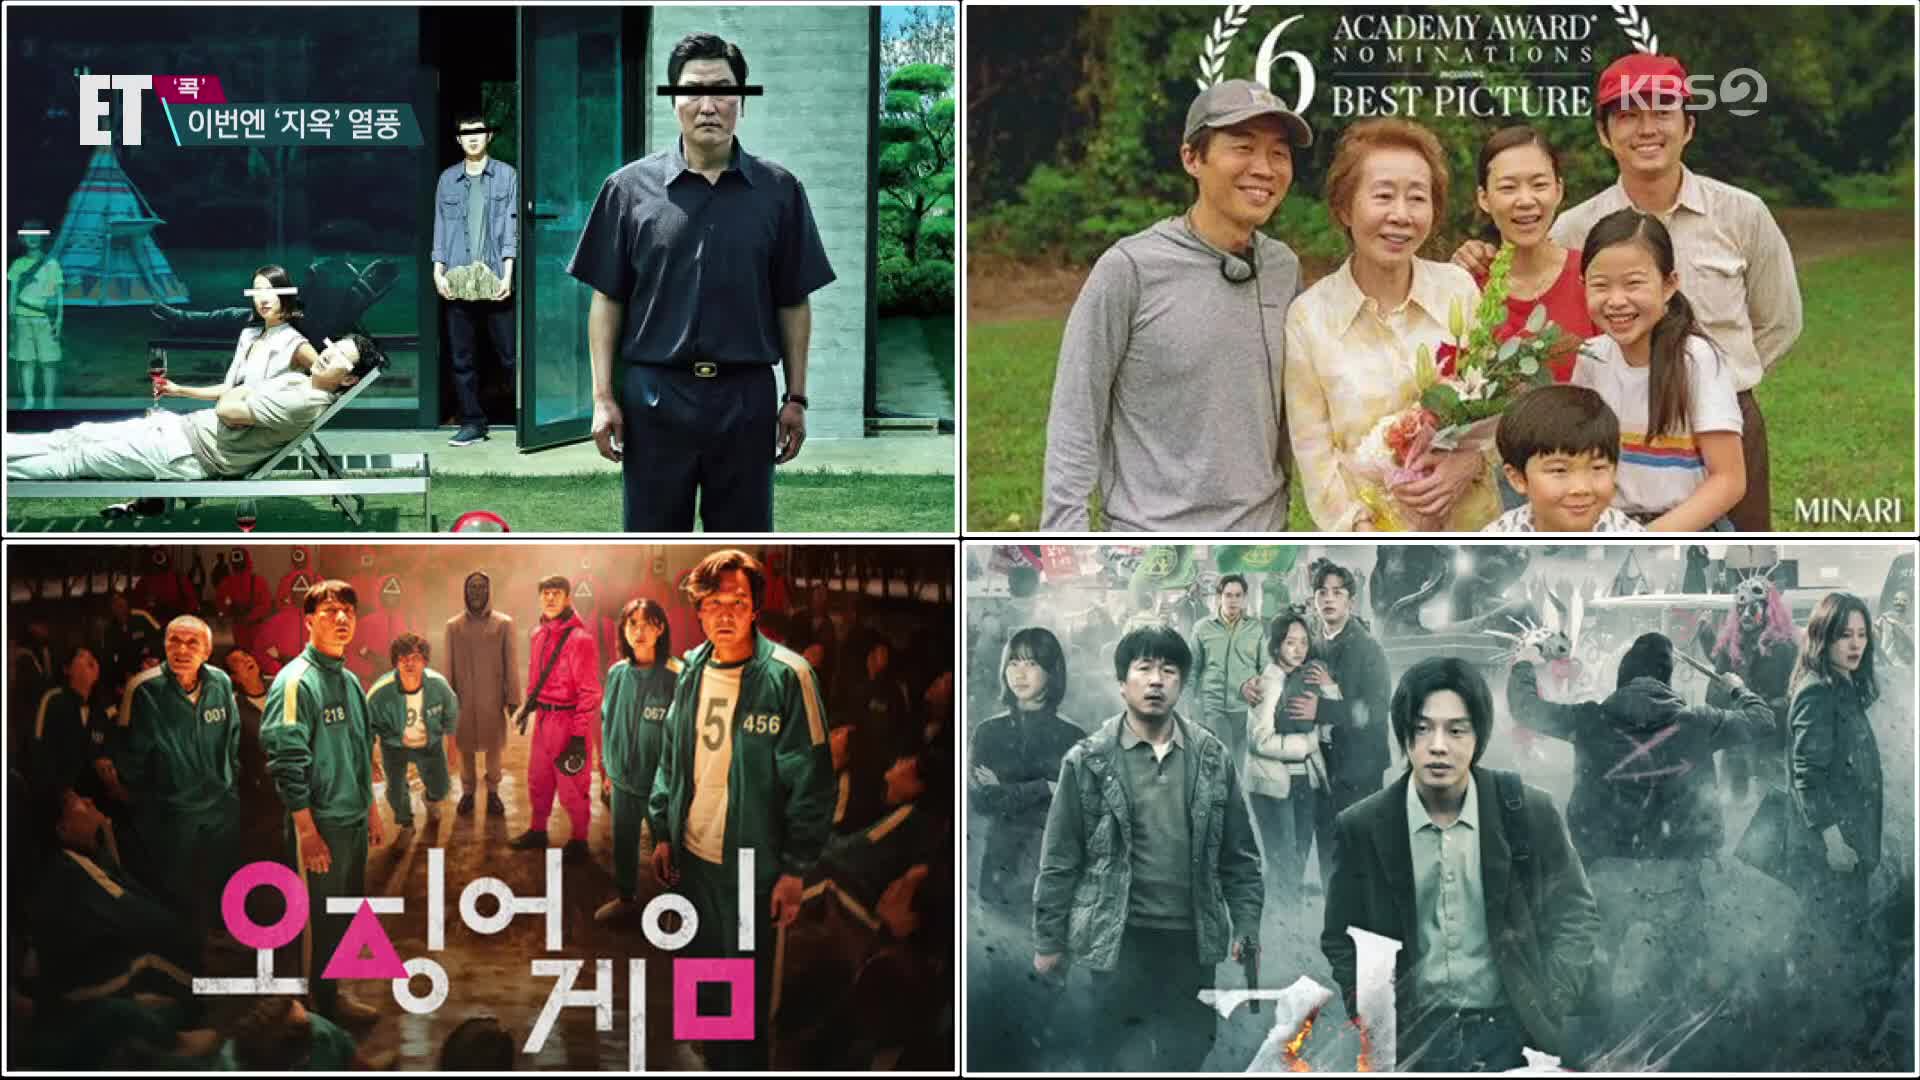 [ET] ‘오징어게임’ 이어 ‘지옥’도 1위…K-드라마 열풍, 왜?